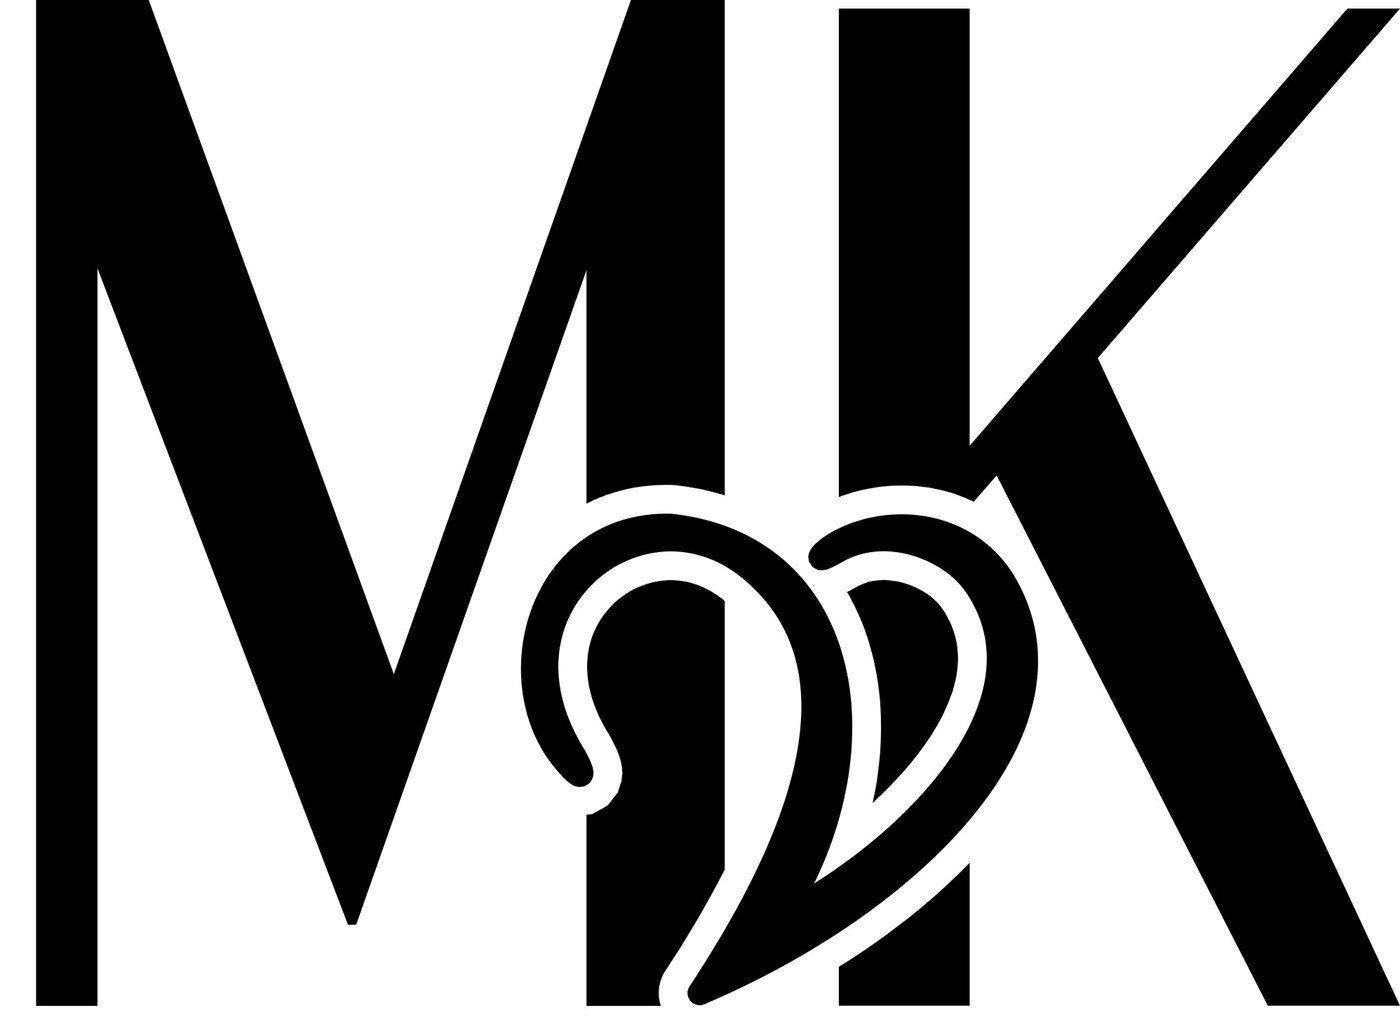 MKV Logo - MKV by Clarethound Graphic Design at Coroflot.com